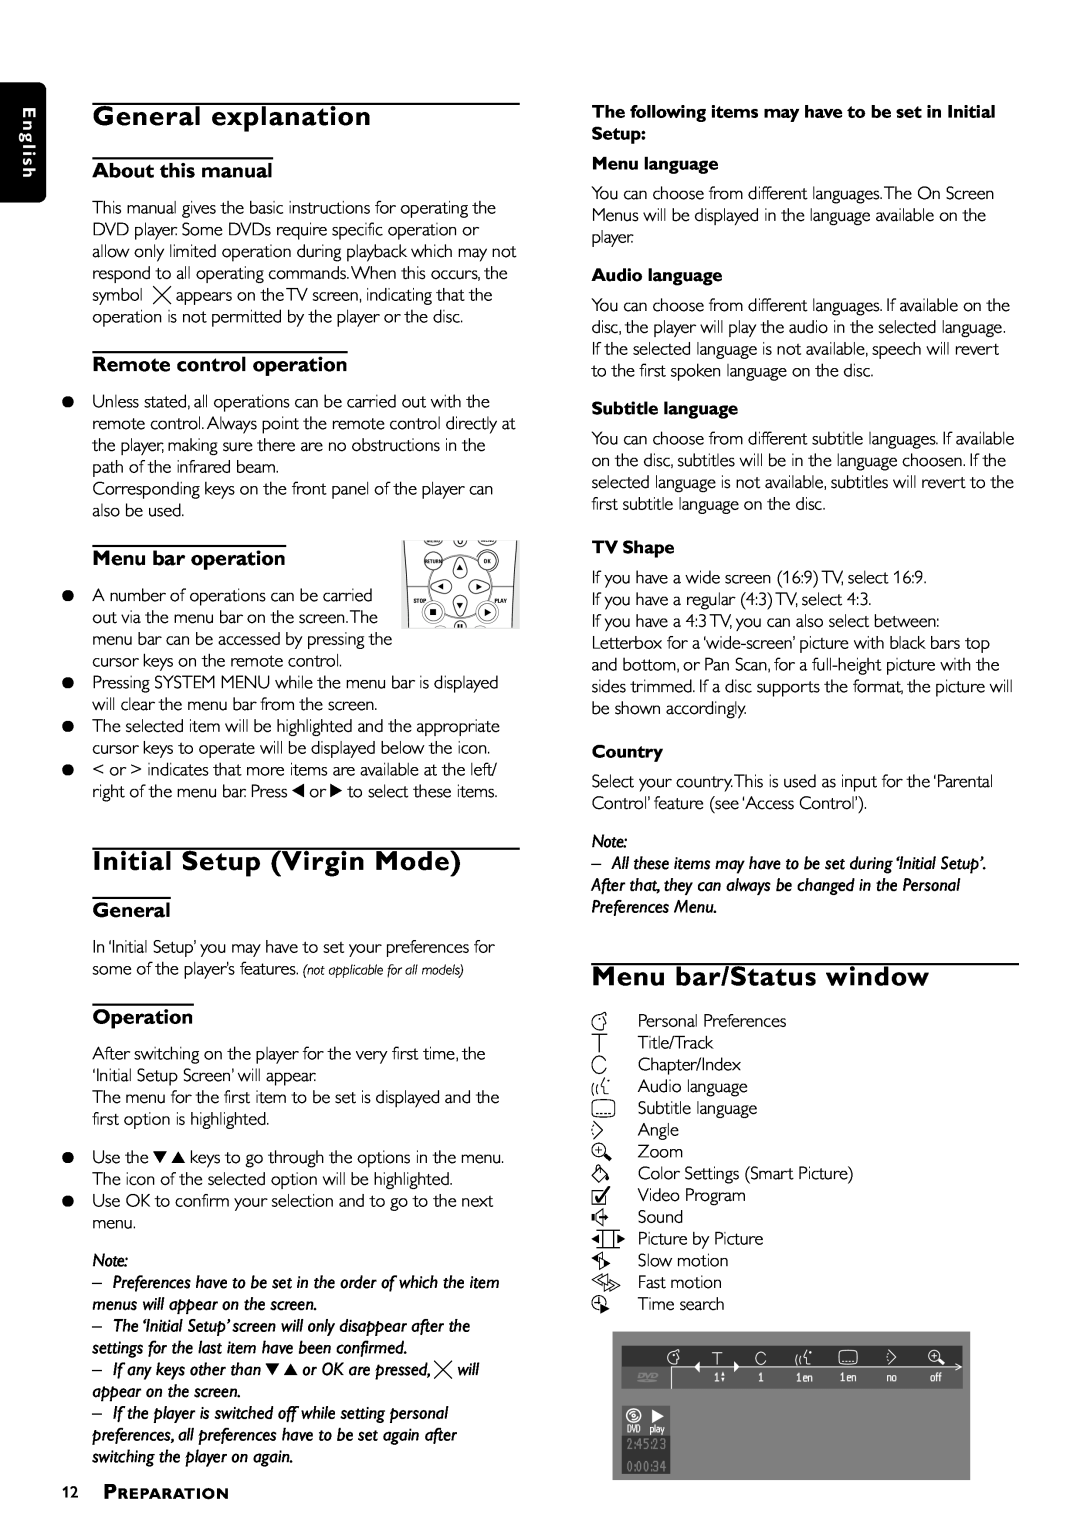 Philips DVD957/G55 General explanation, Initial Setup Virgin Mode, Menu bar/Status window, About this manual, Operation 